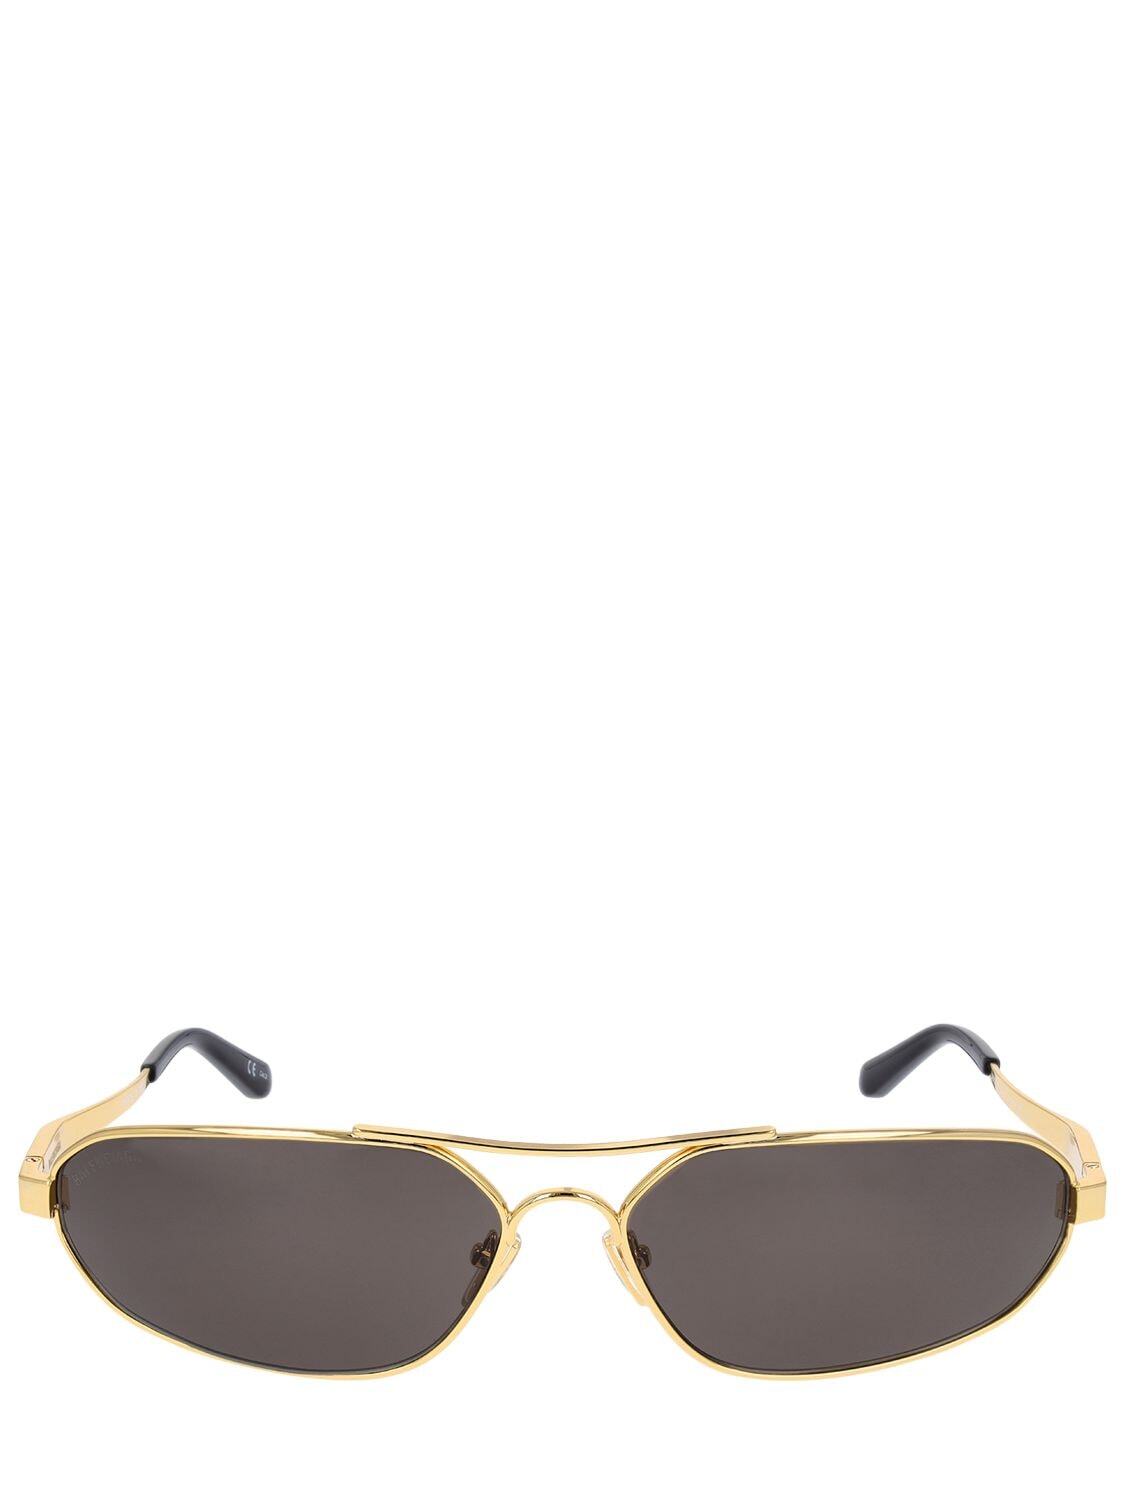 BALENCIAGA 0227s Stretch Oval Metal Sunglasses in black